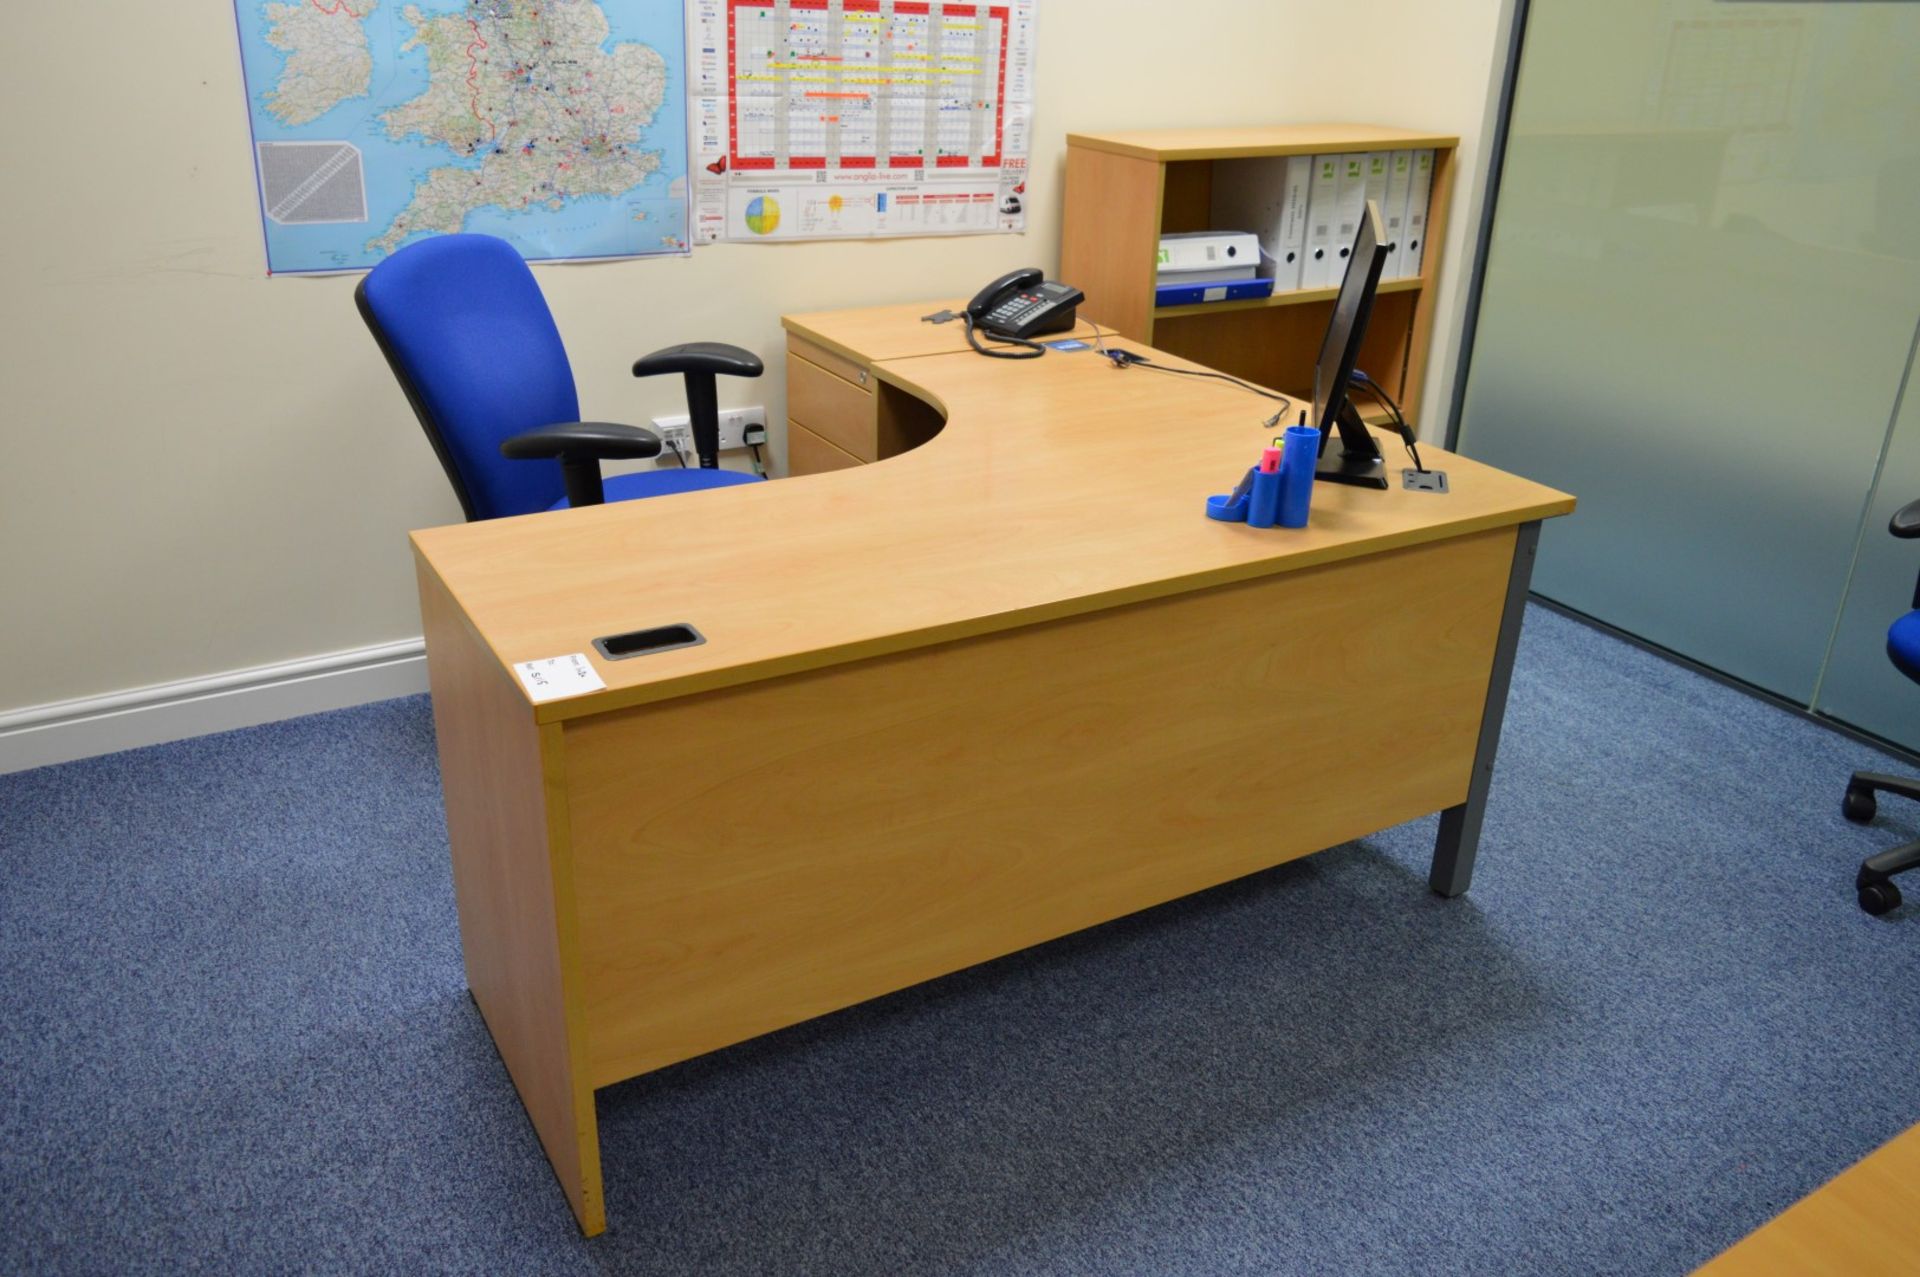 1 x Office Furniture Set Including Large Desk, Drawer Pedestal, Swivel Chair and Shelving Unit - - Image 2 of 10